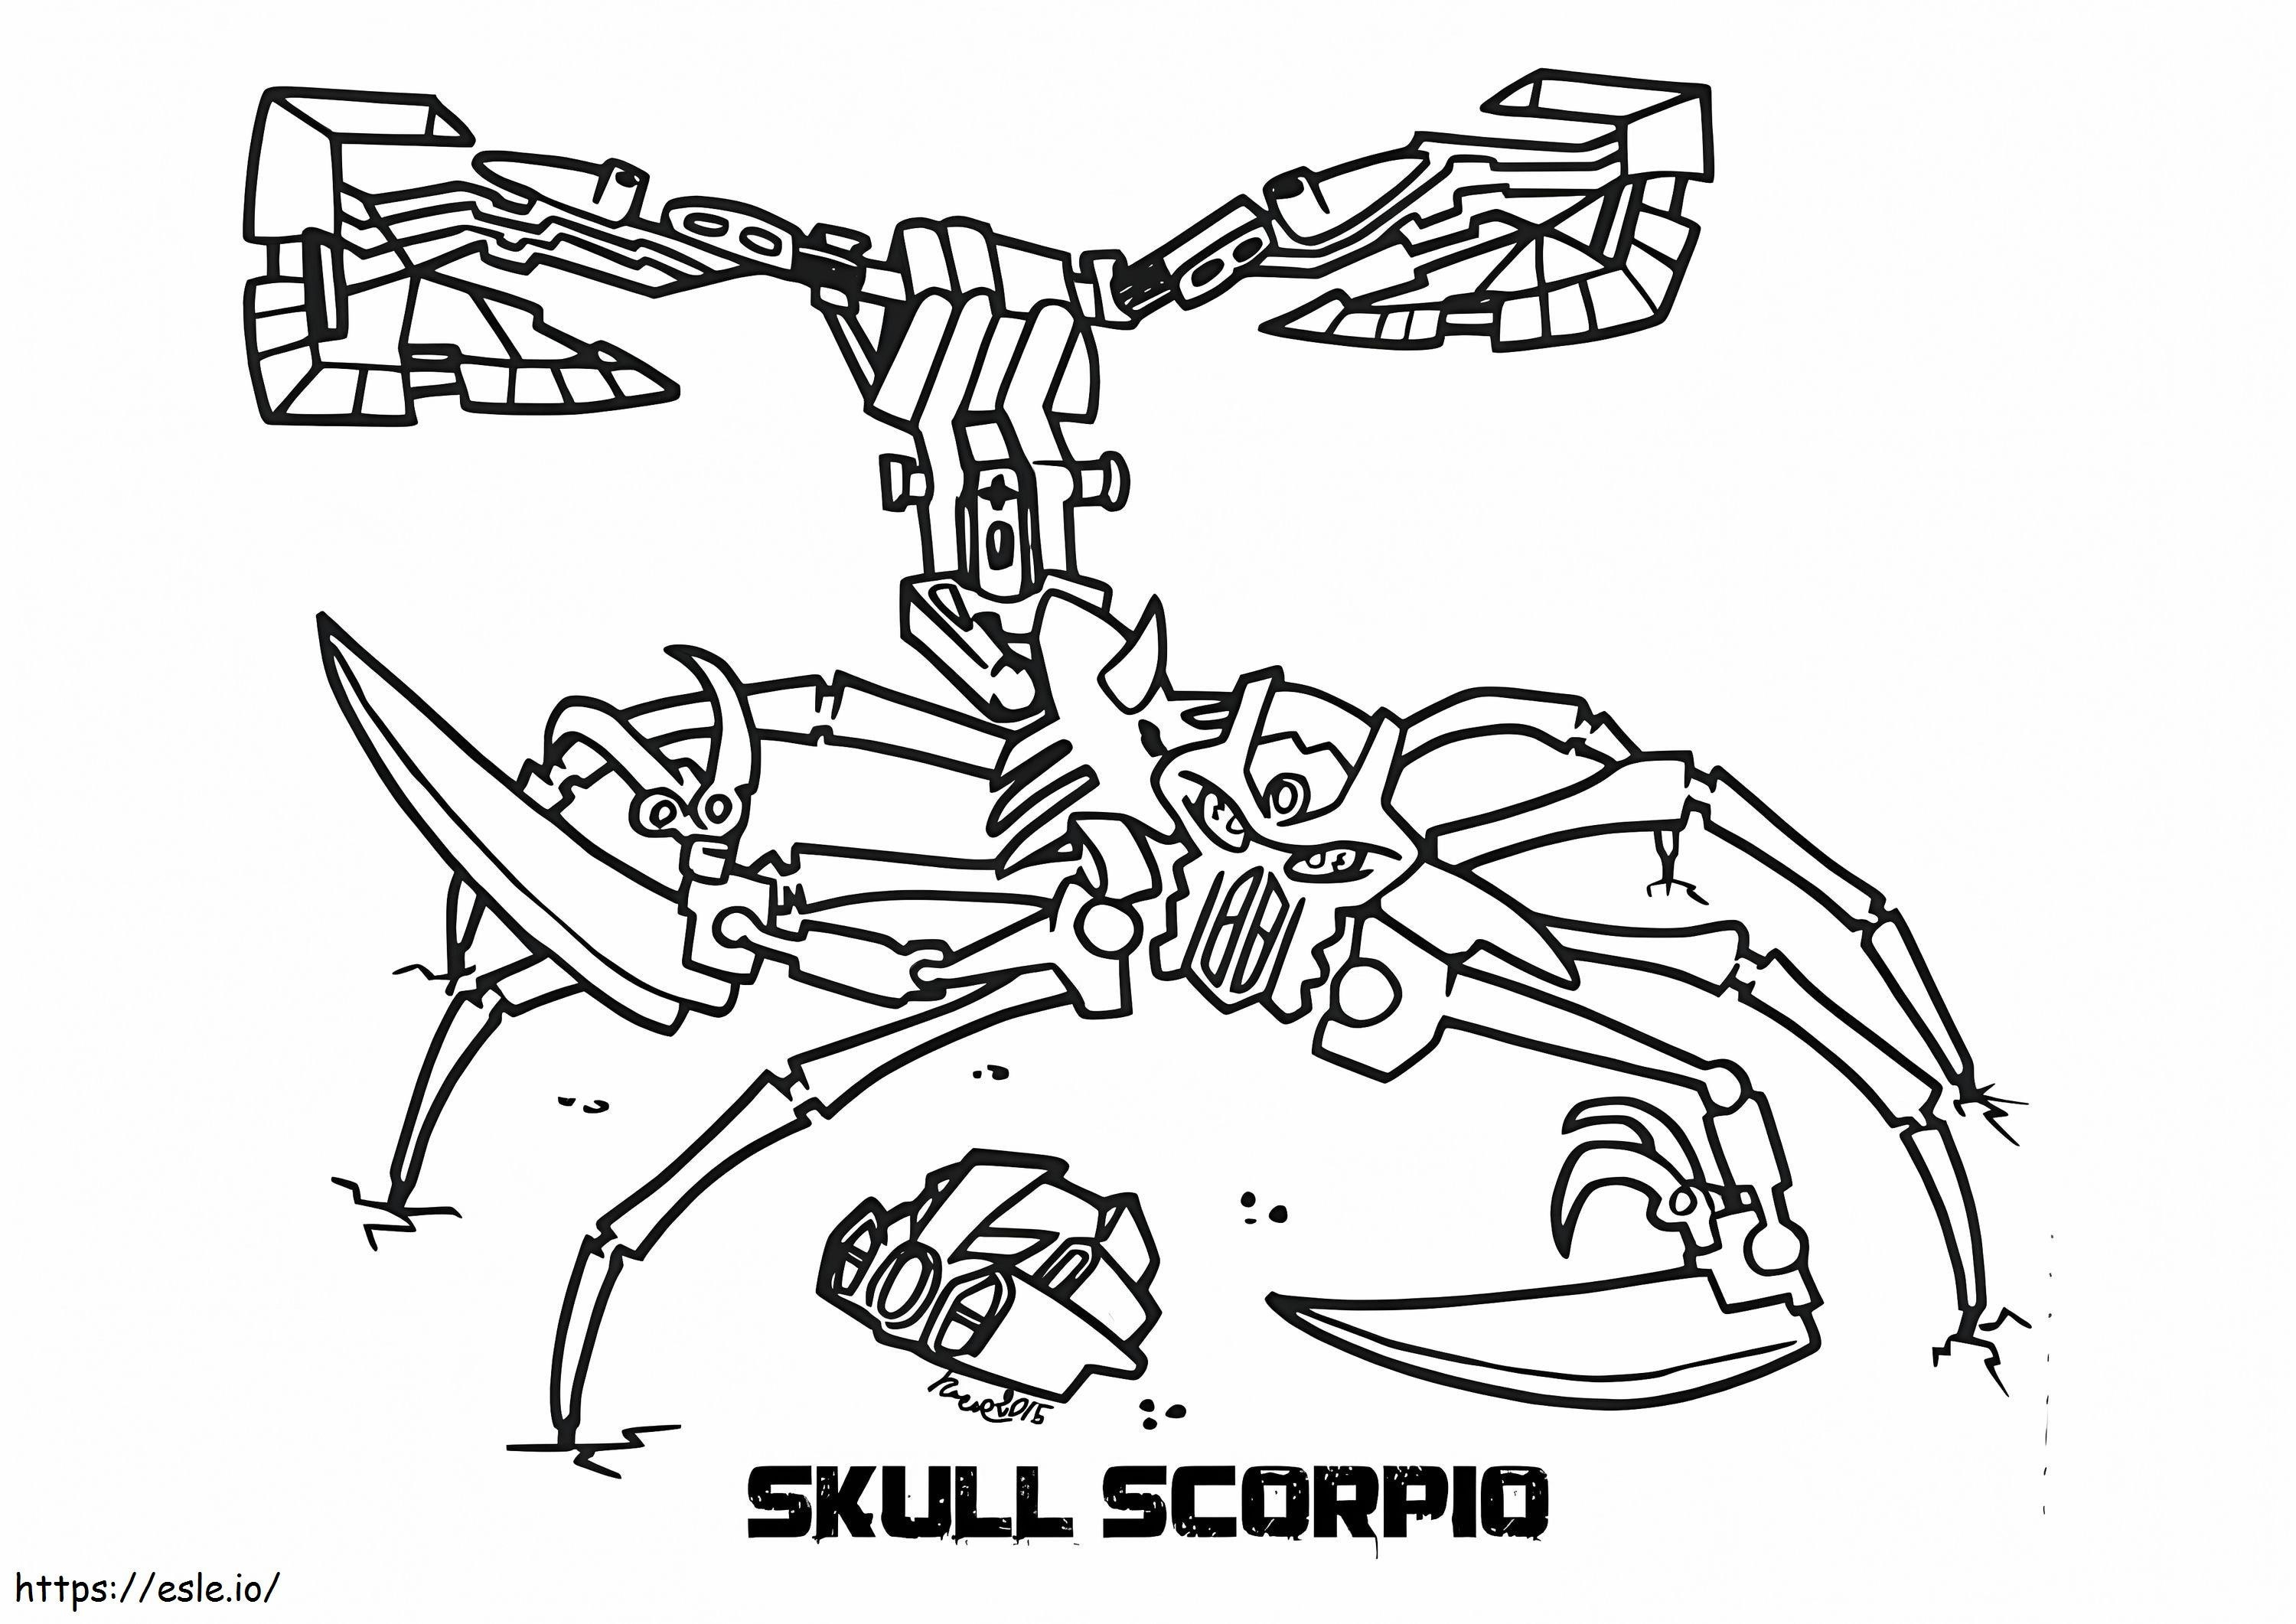 Czaszka Skorpion Bionicle kolorowanka